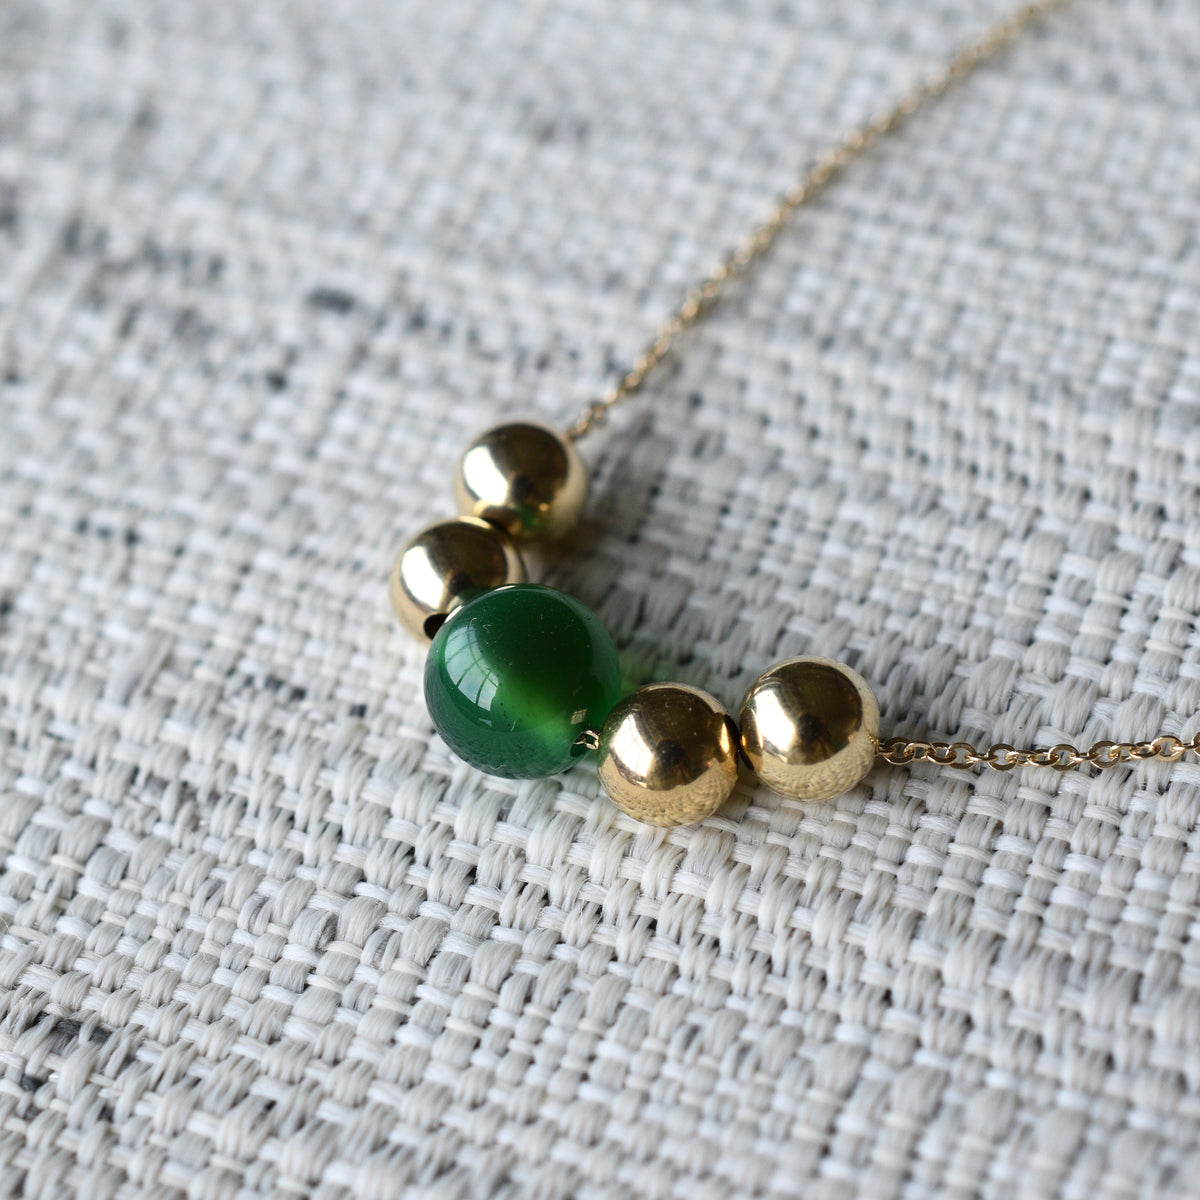 Tj necklace green agate - Gem